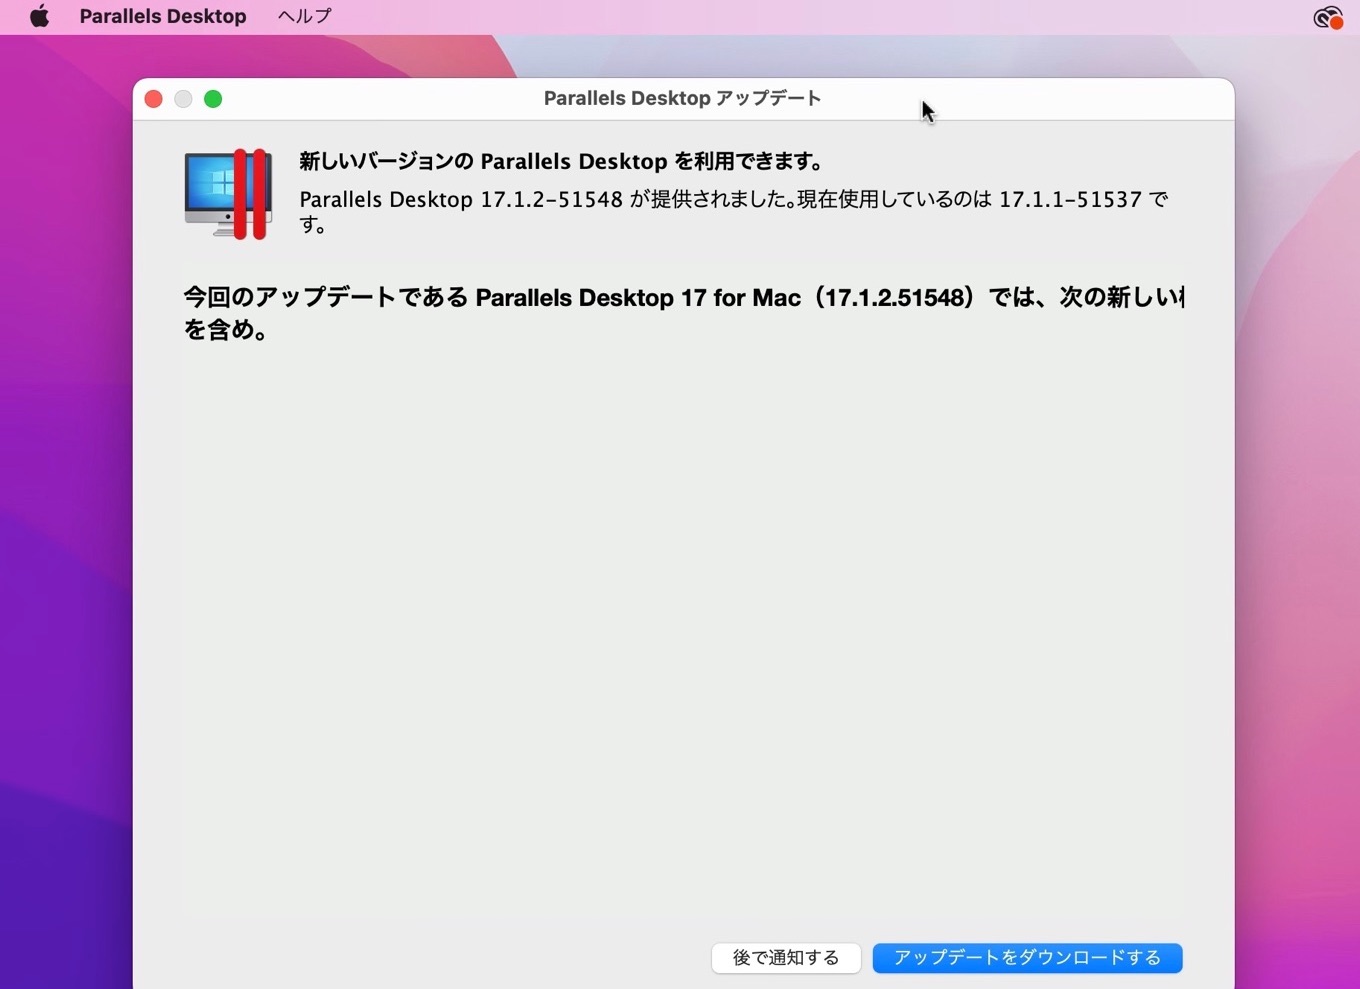 Parallels Desktop 17 for Mac 17.1.2 (51548)